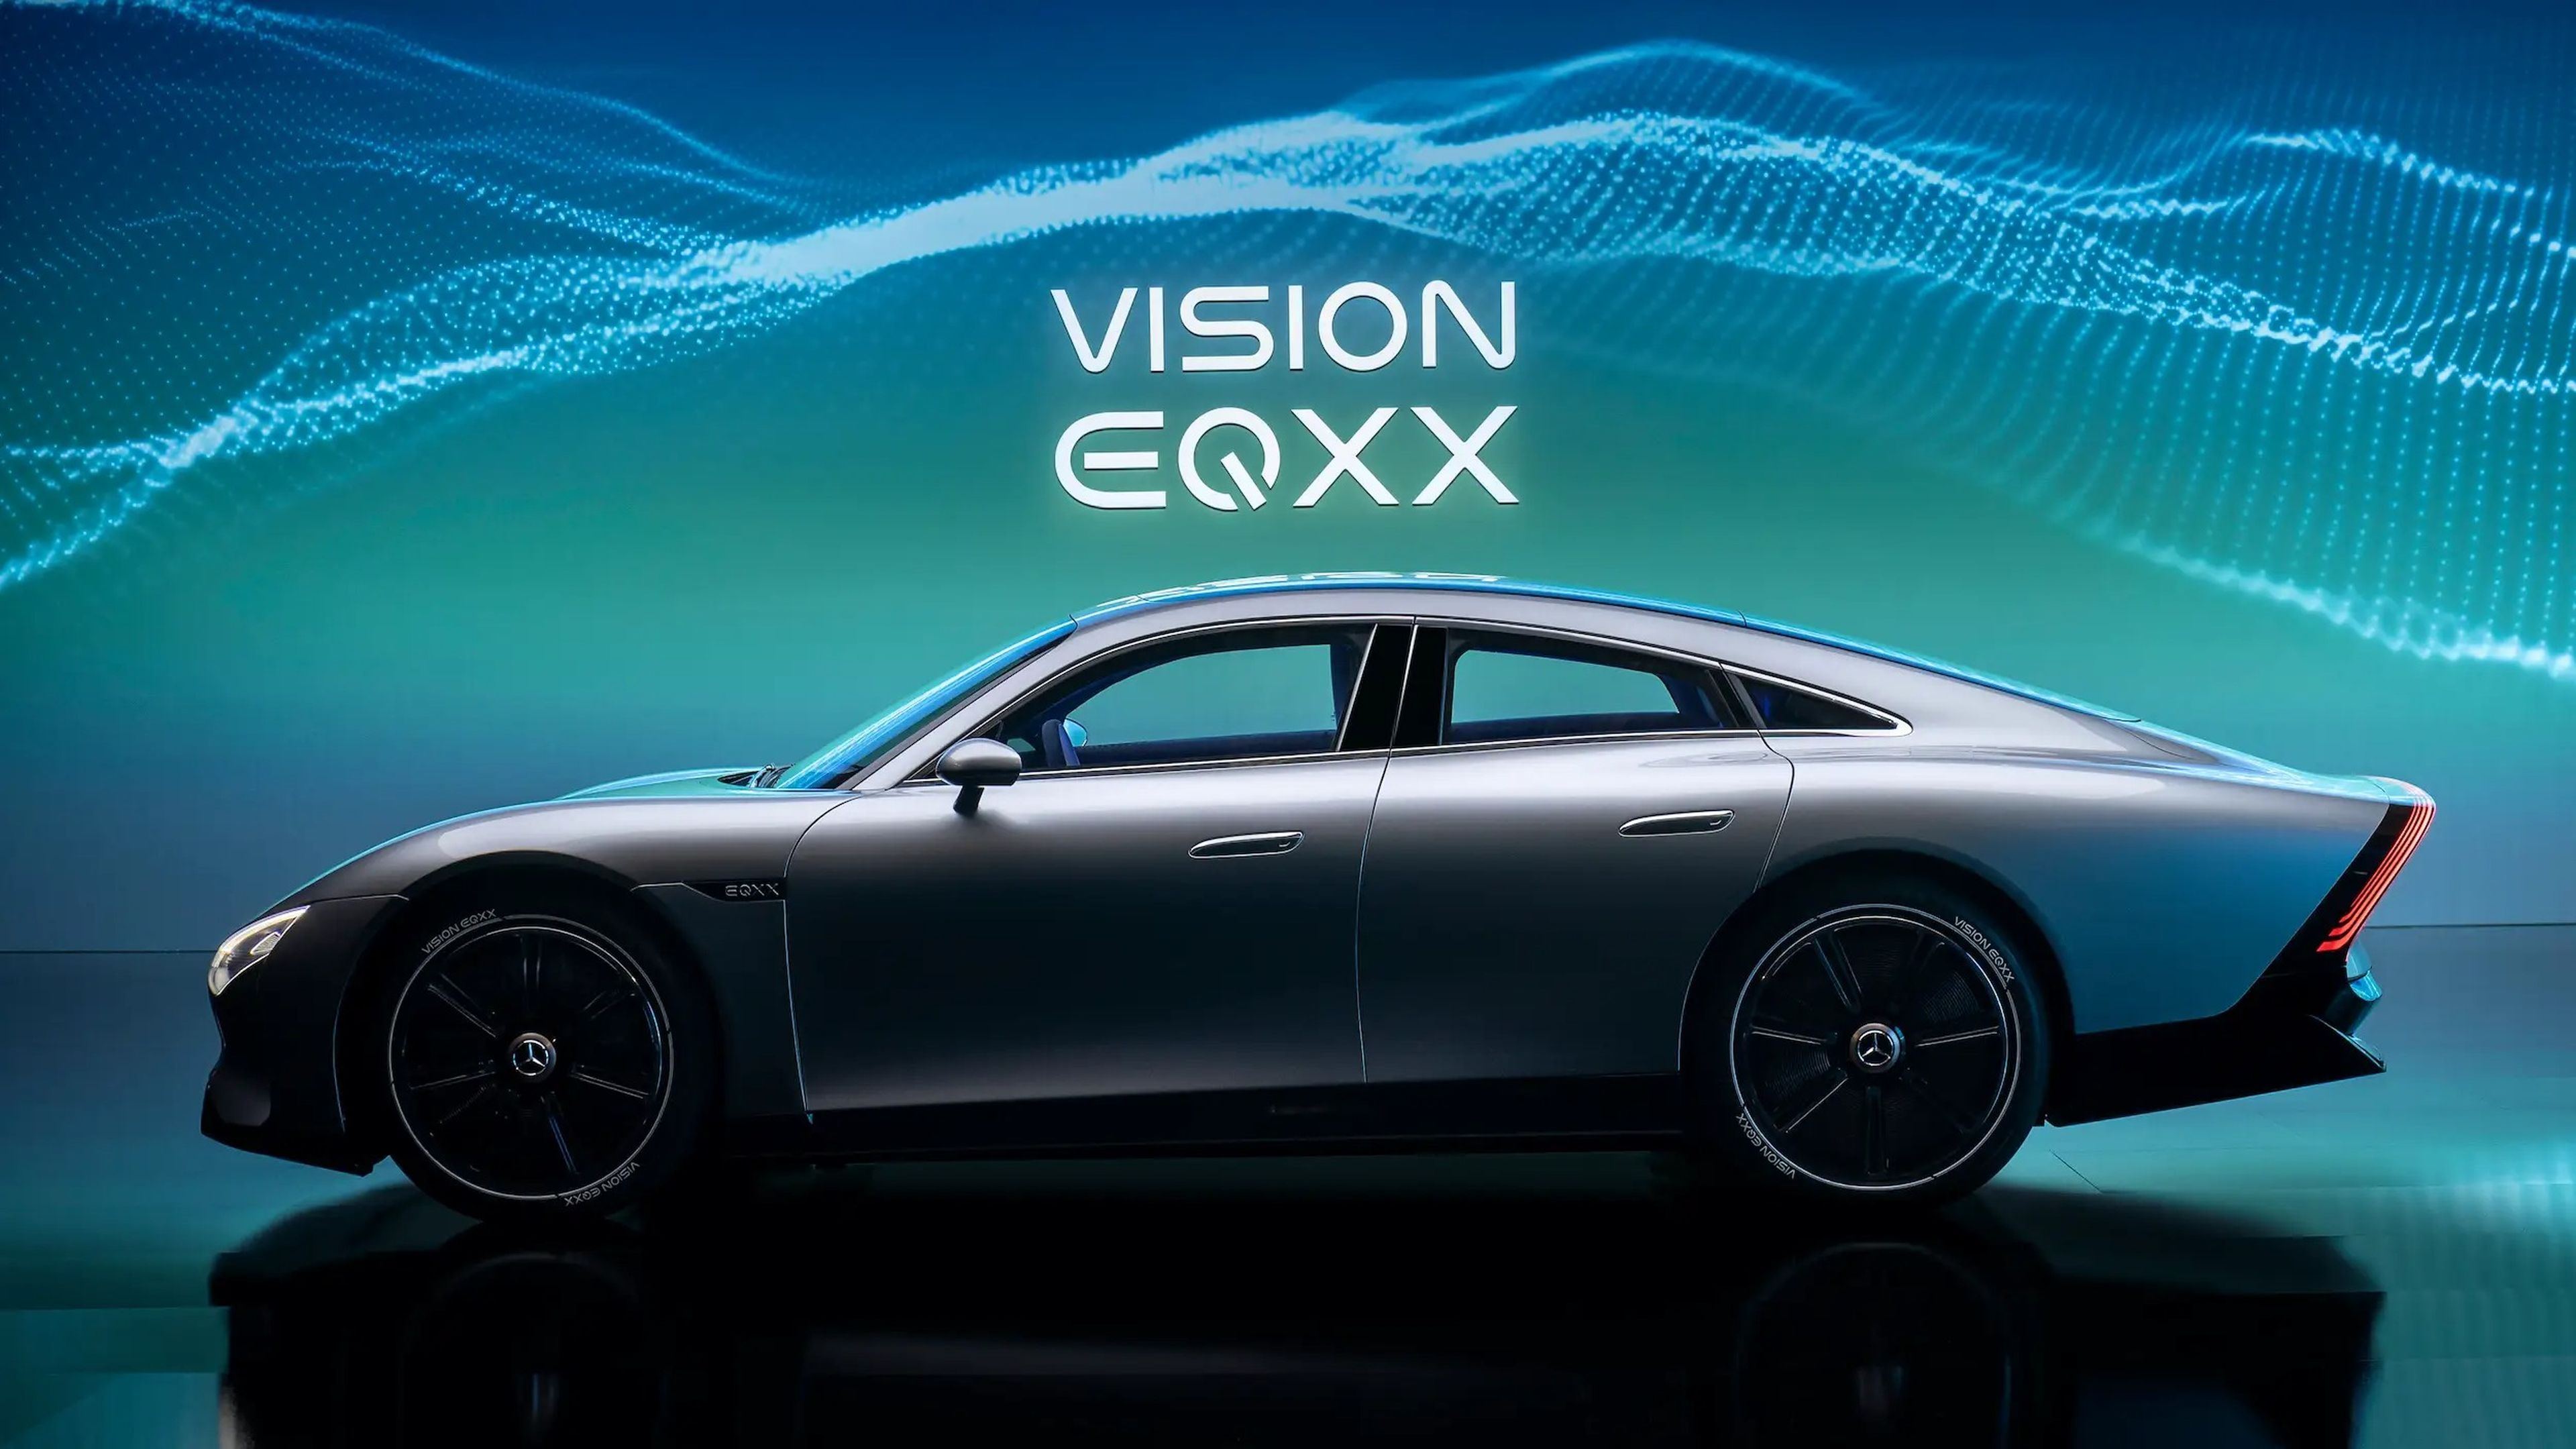 Mercedes-Benz Vision EQXX concept EV.